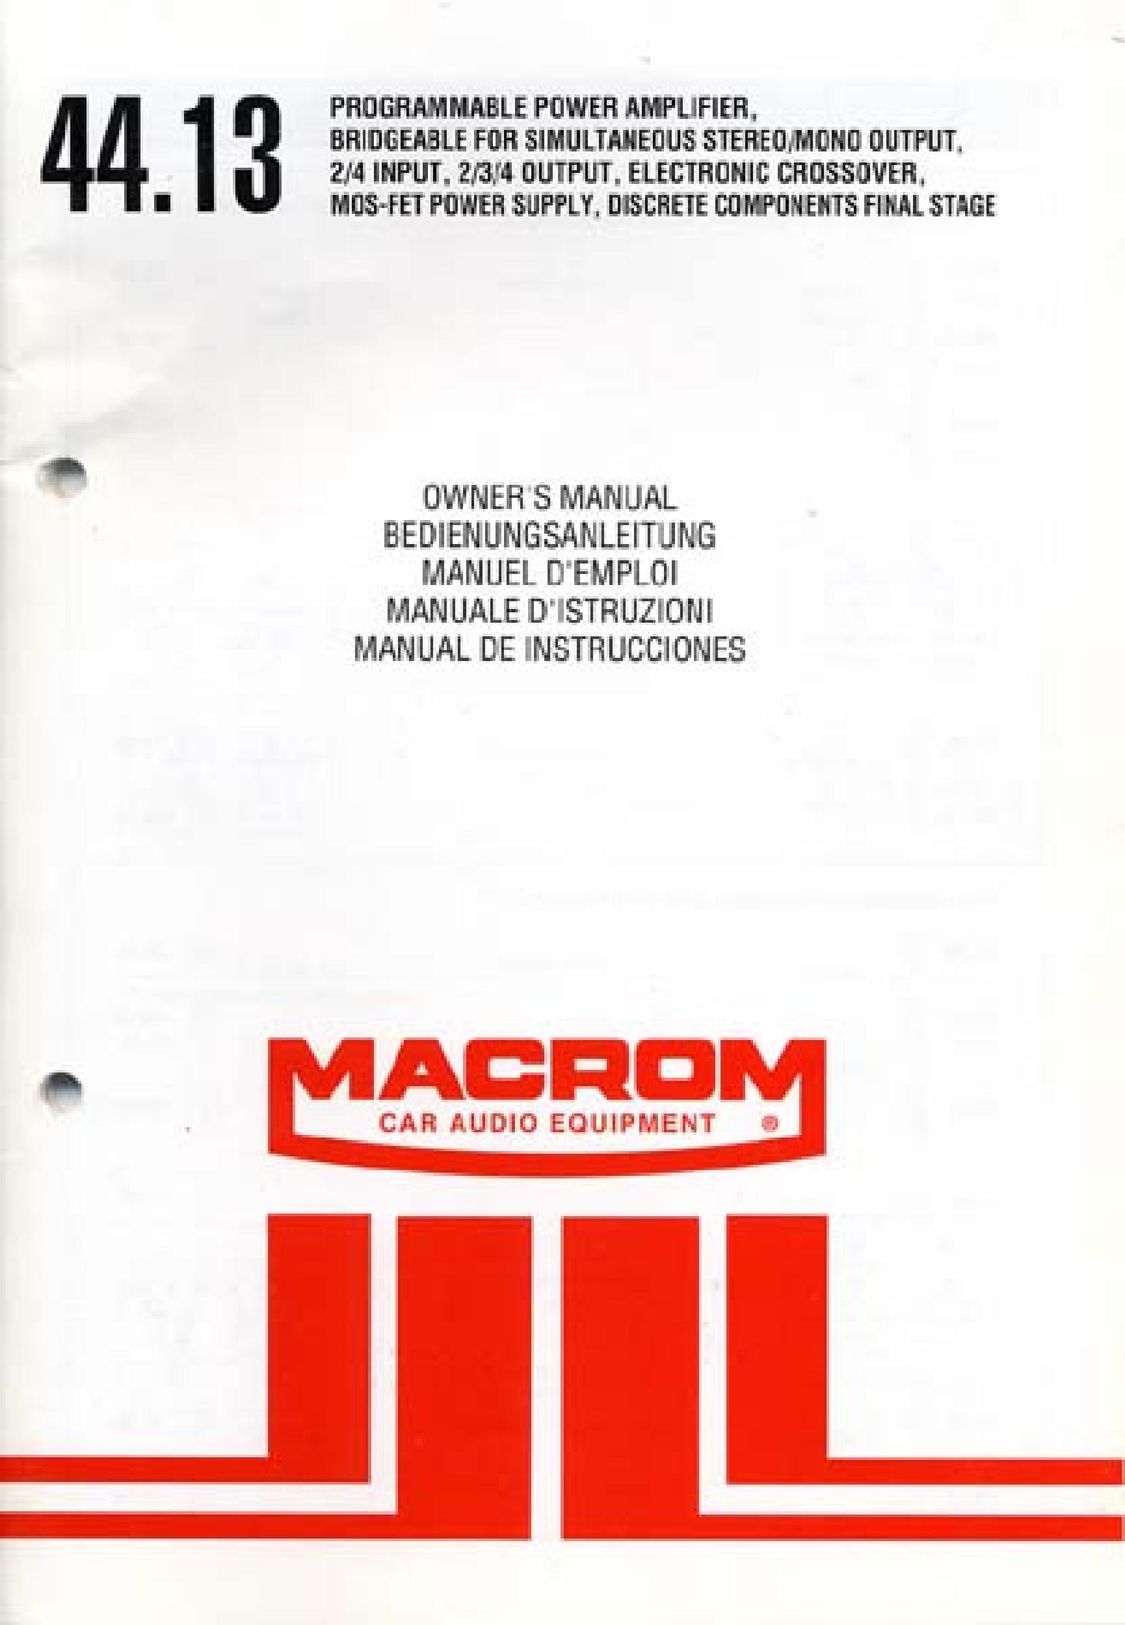 Macrom 44.13 Stereo Amplifier User Manual